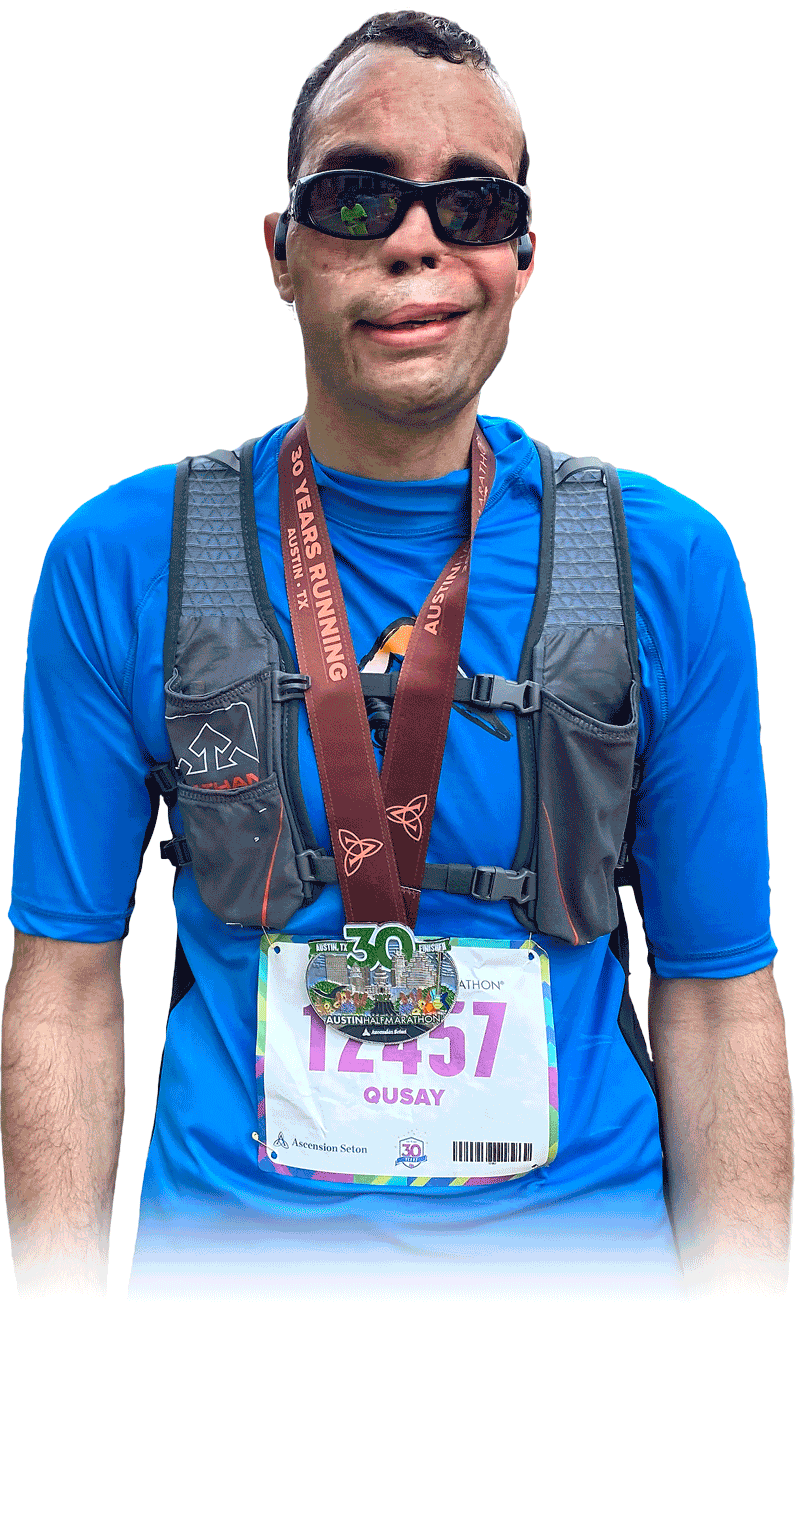 Qusay at marathon (no background)